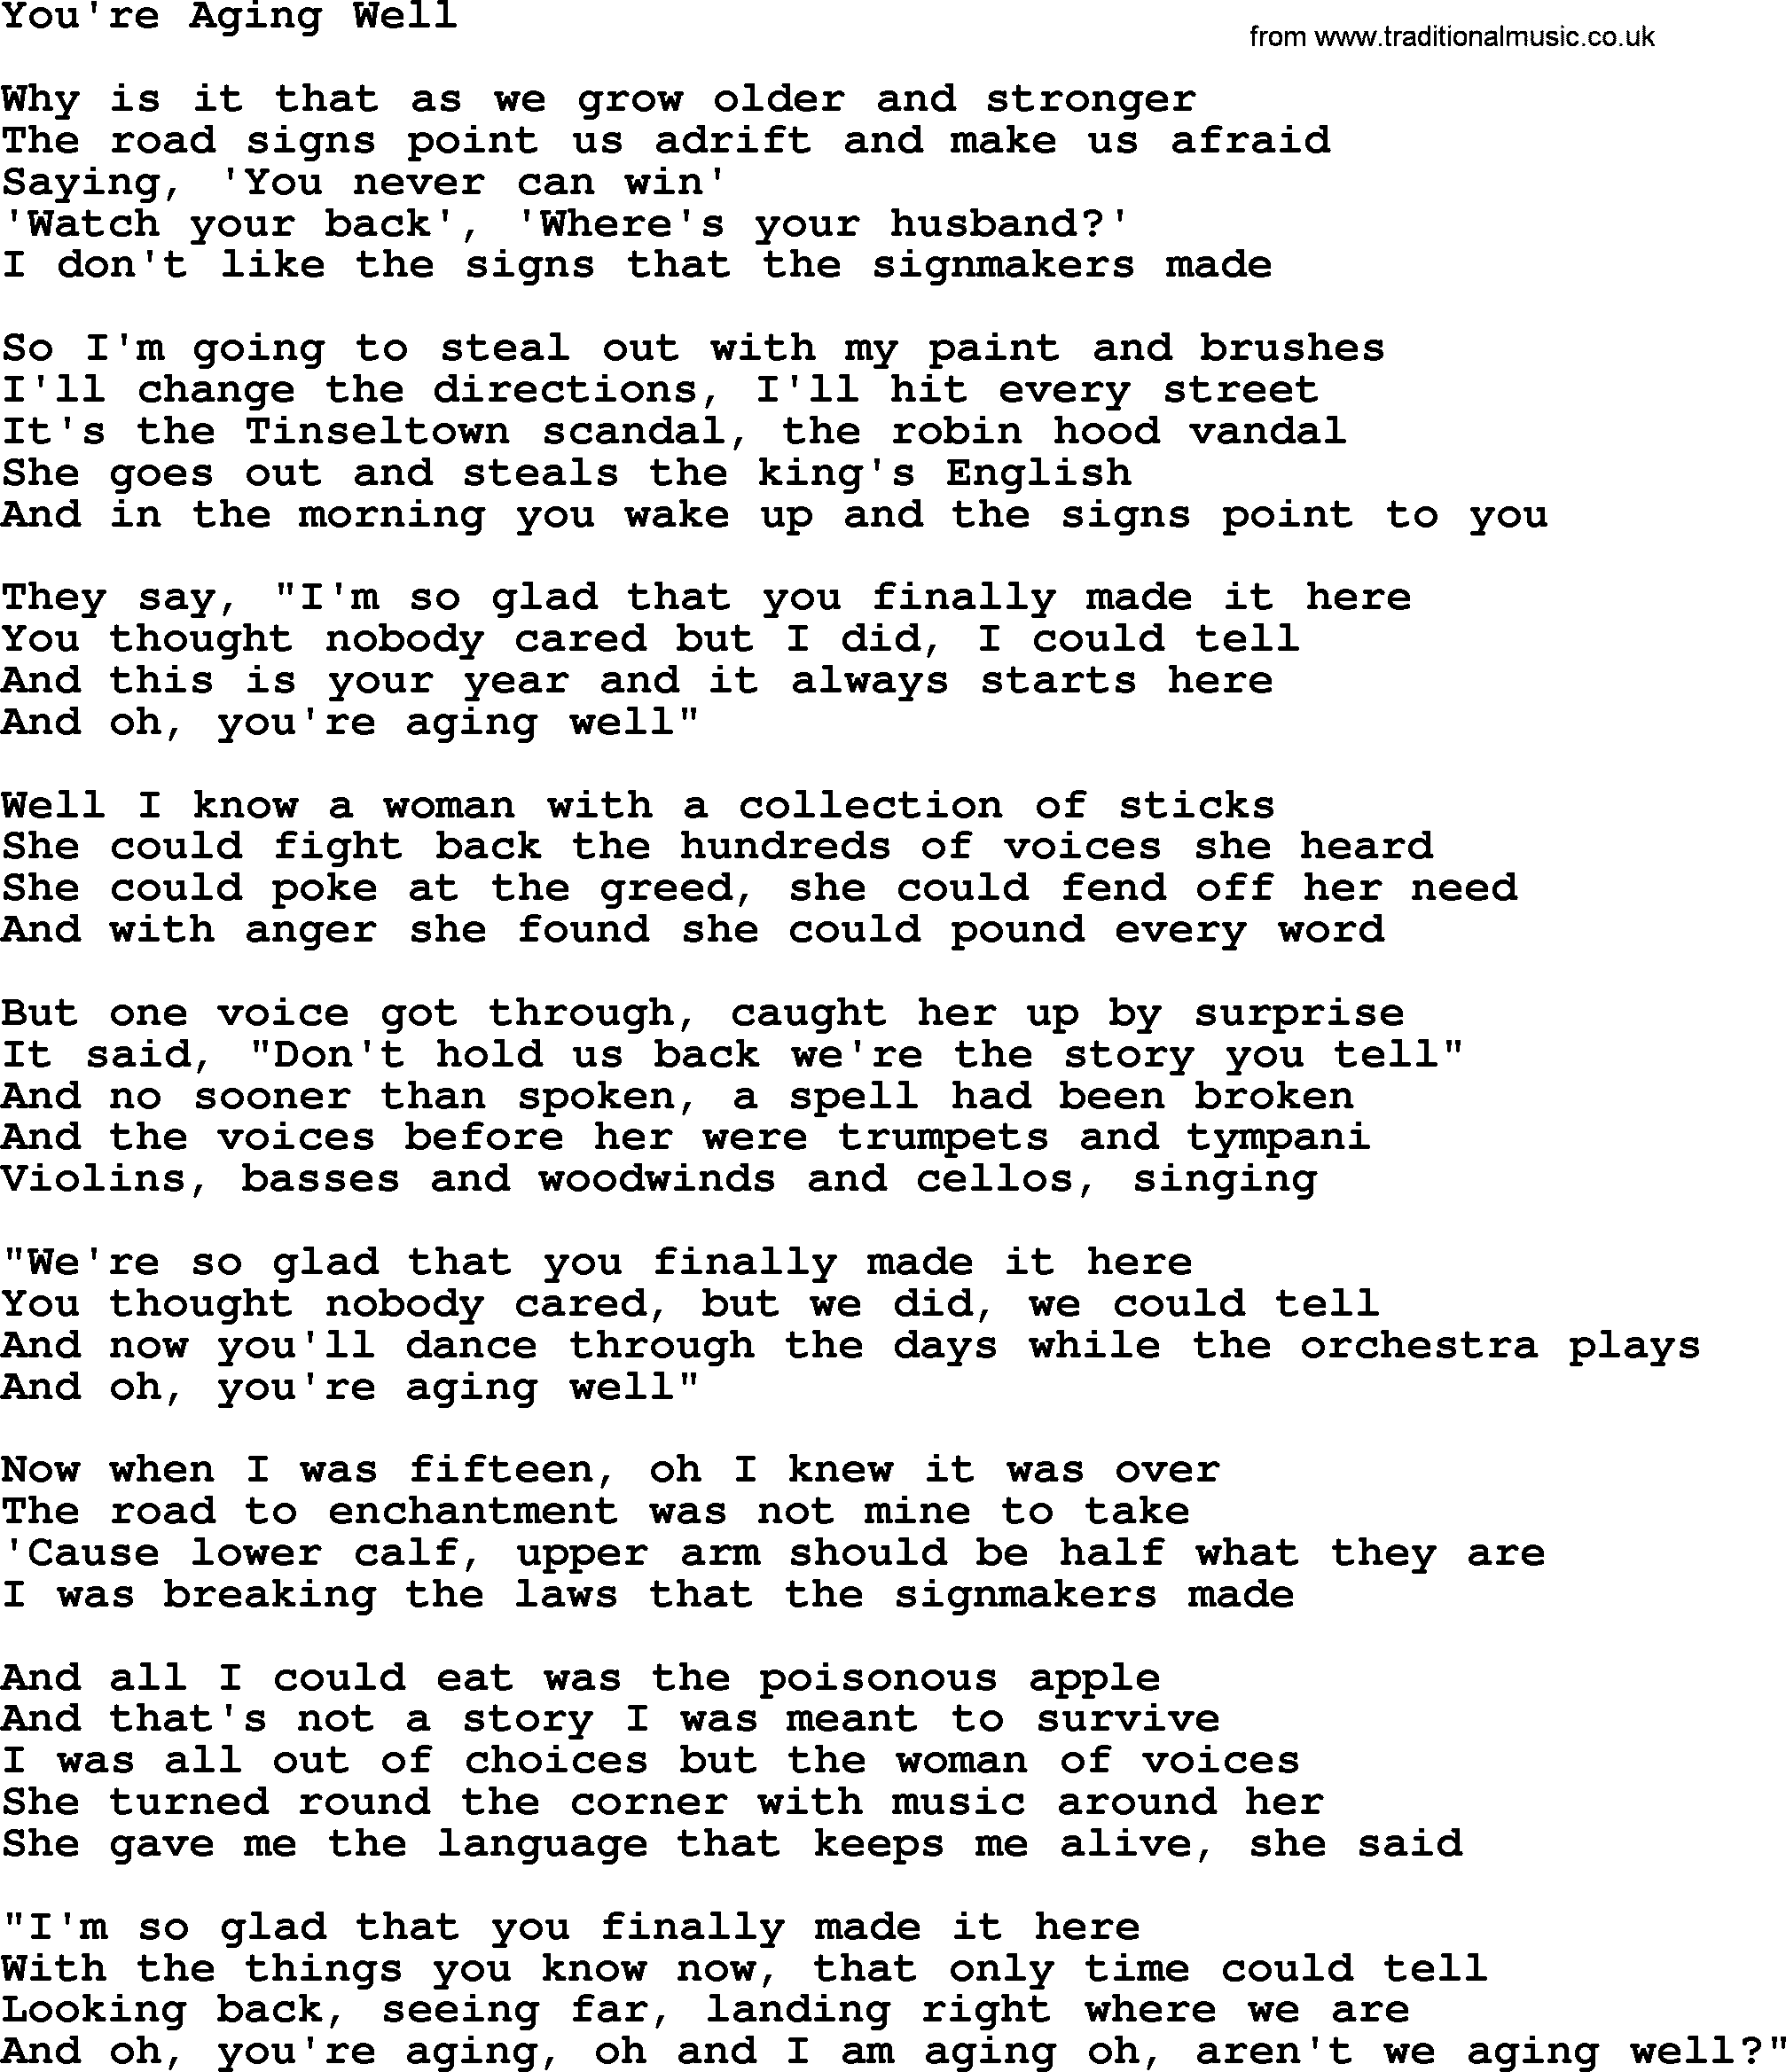 Joan Baez song You're Aging Well, lyrics